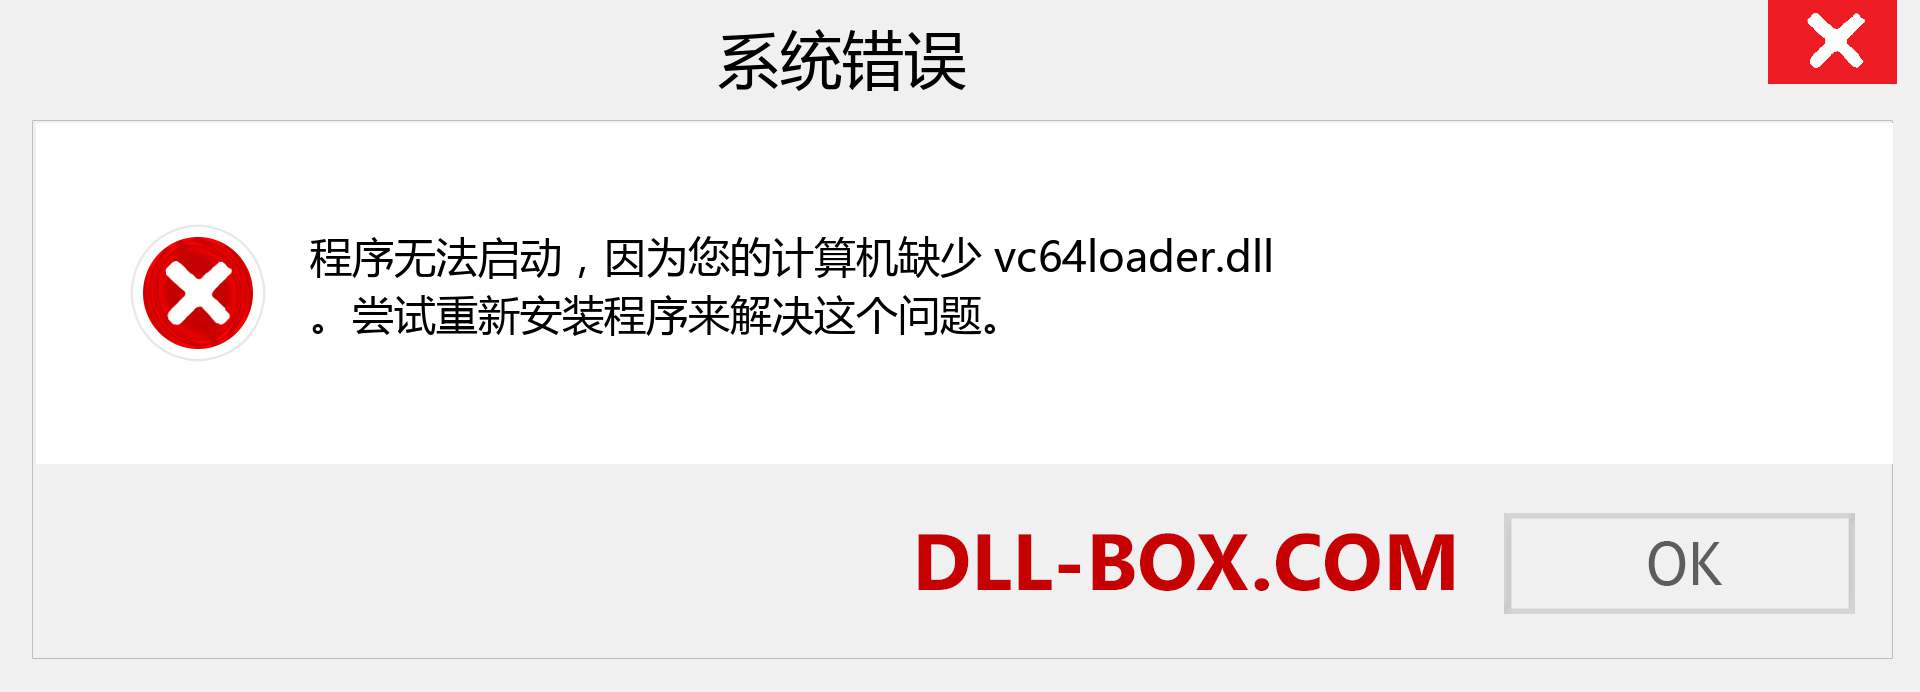 vc64loader.dll 文件丢失？。 适用于 Windows 7、8、10 的下载 - 修复 Windows、照片、图像上的 vc64loader dll 丢失错误